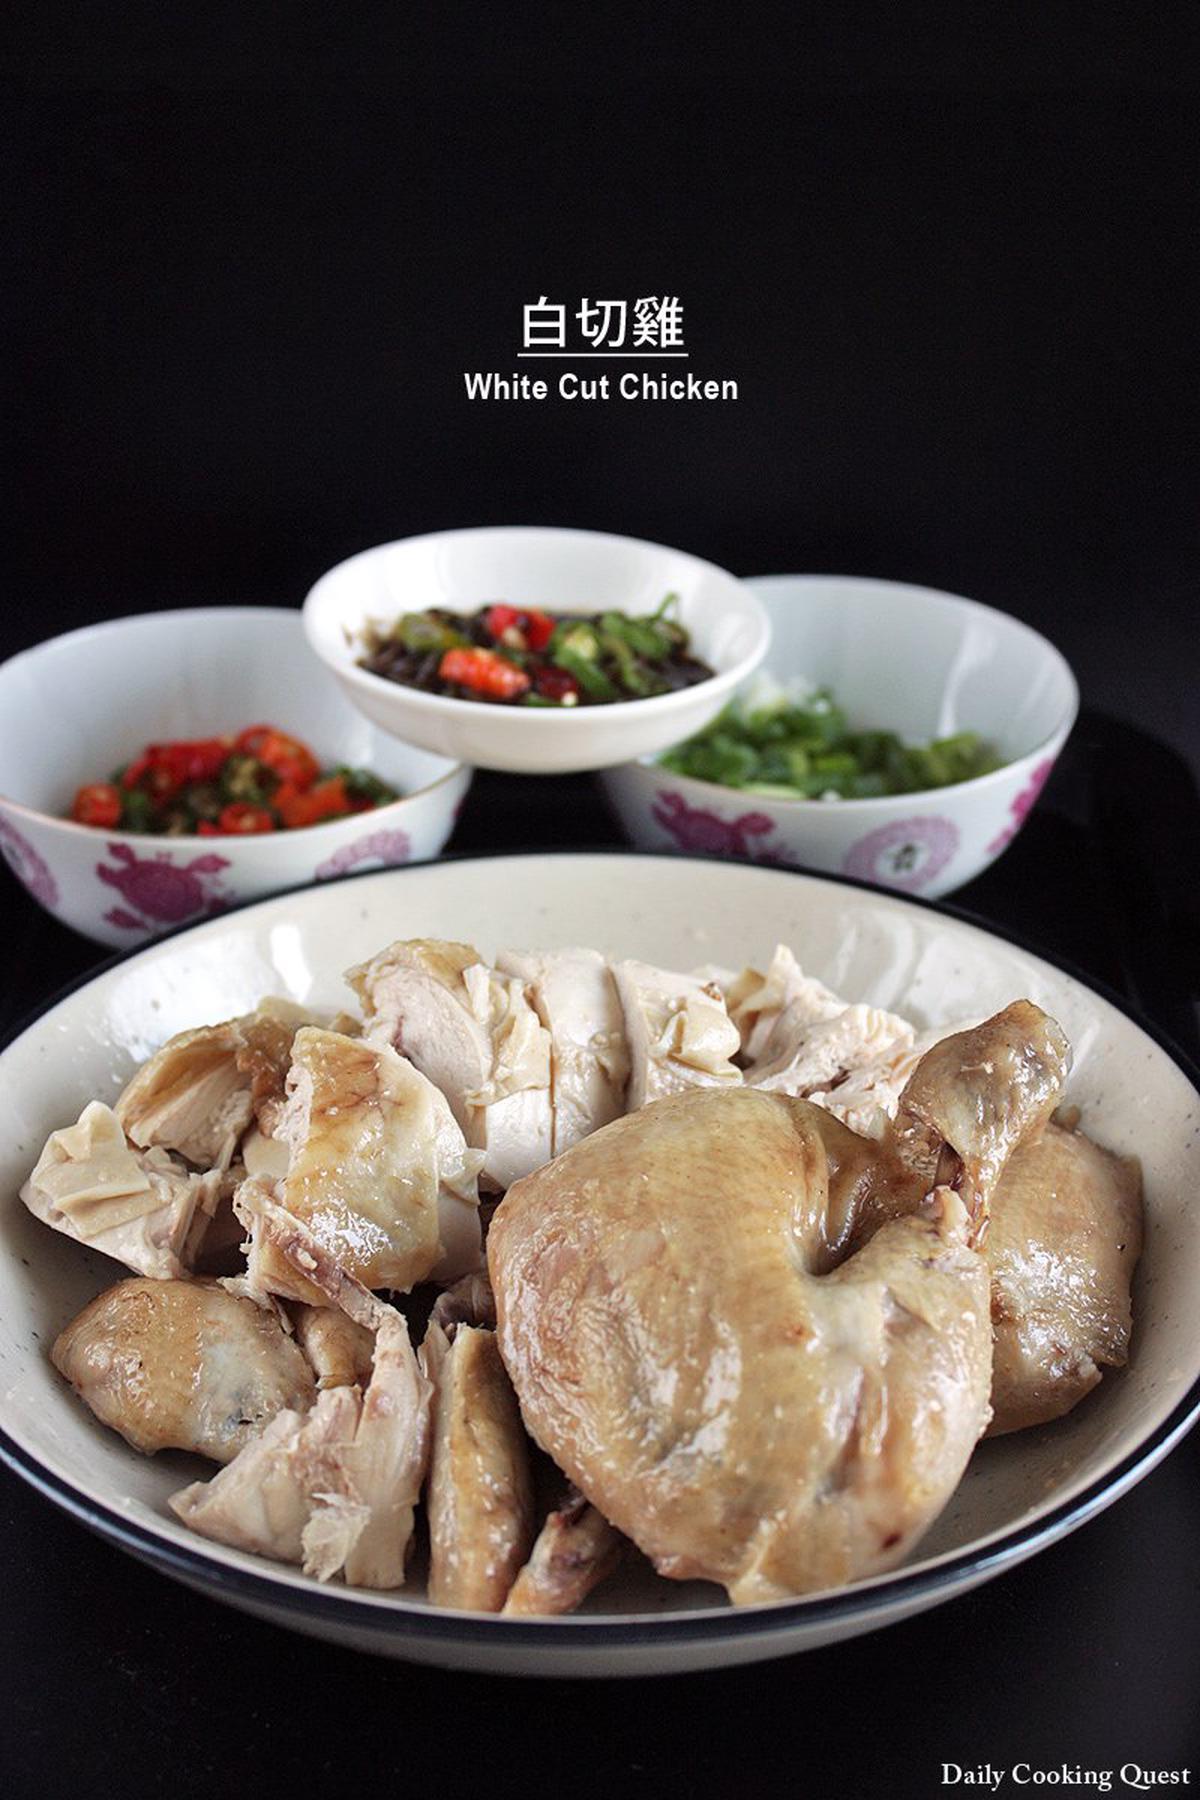 白切雞 - White Cut Chicken